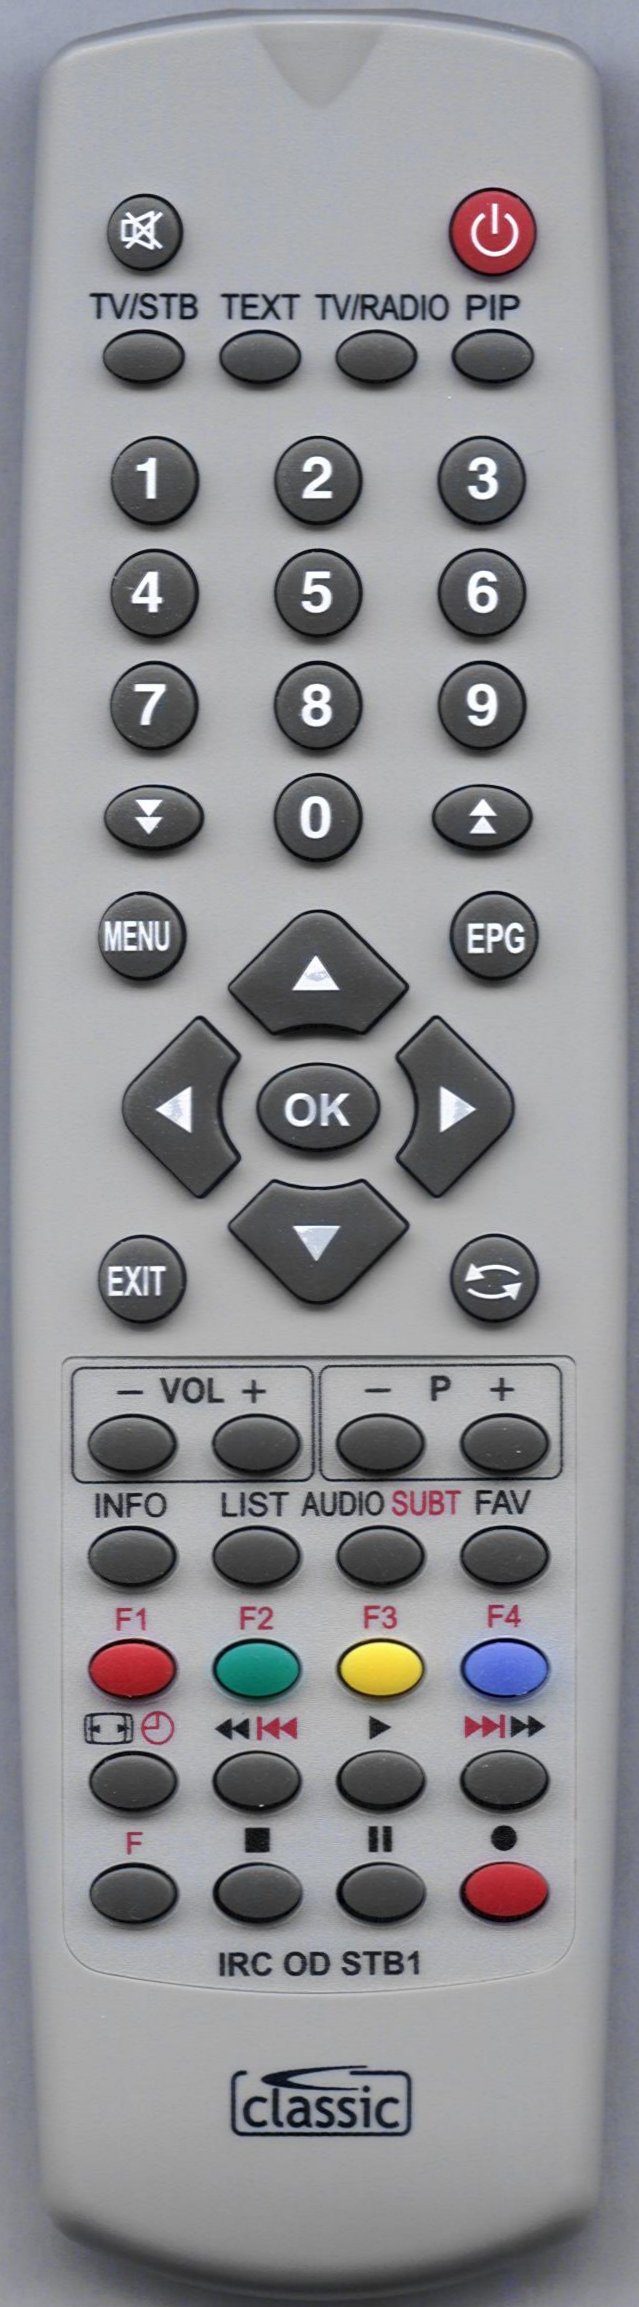 HUMAX F2-FOX Remote Control